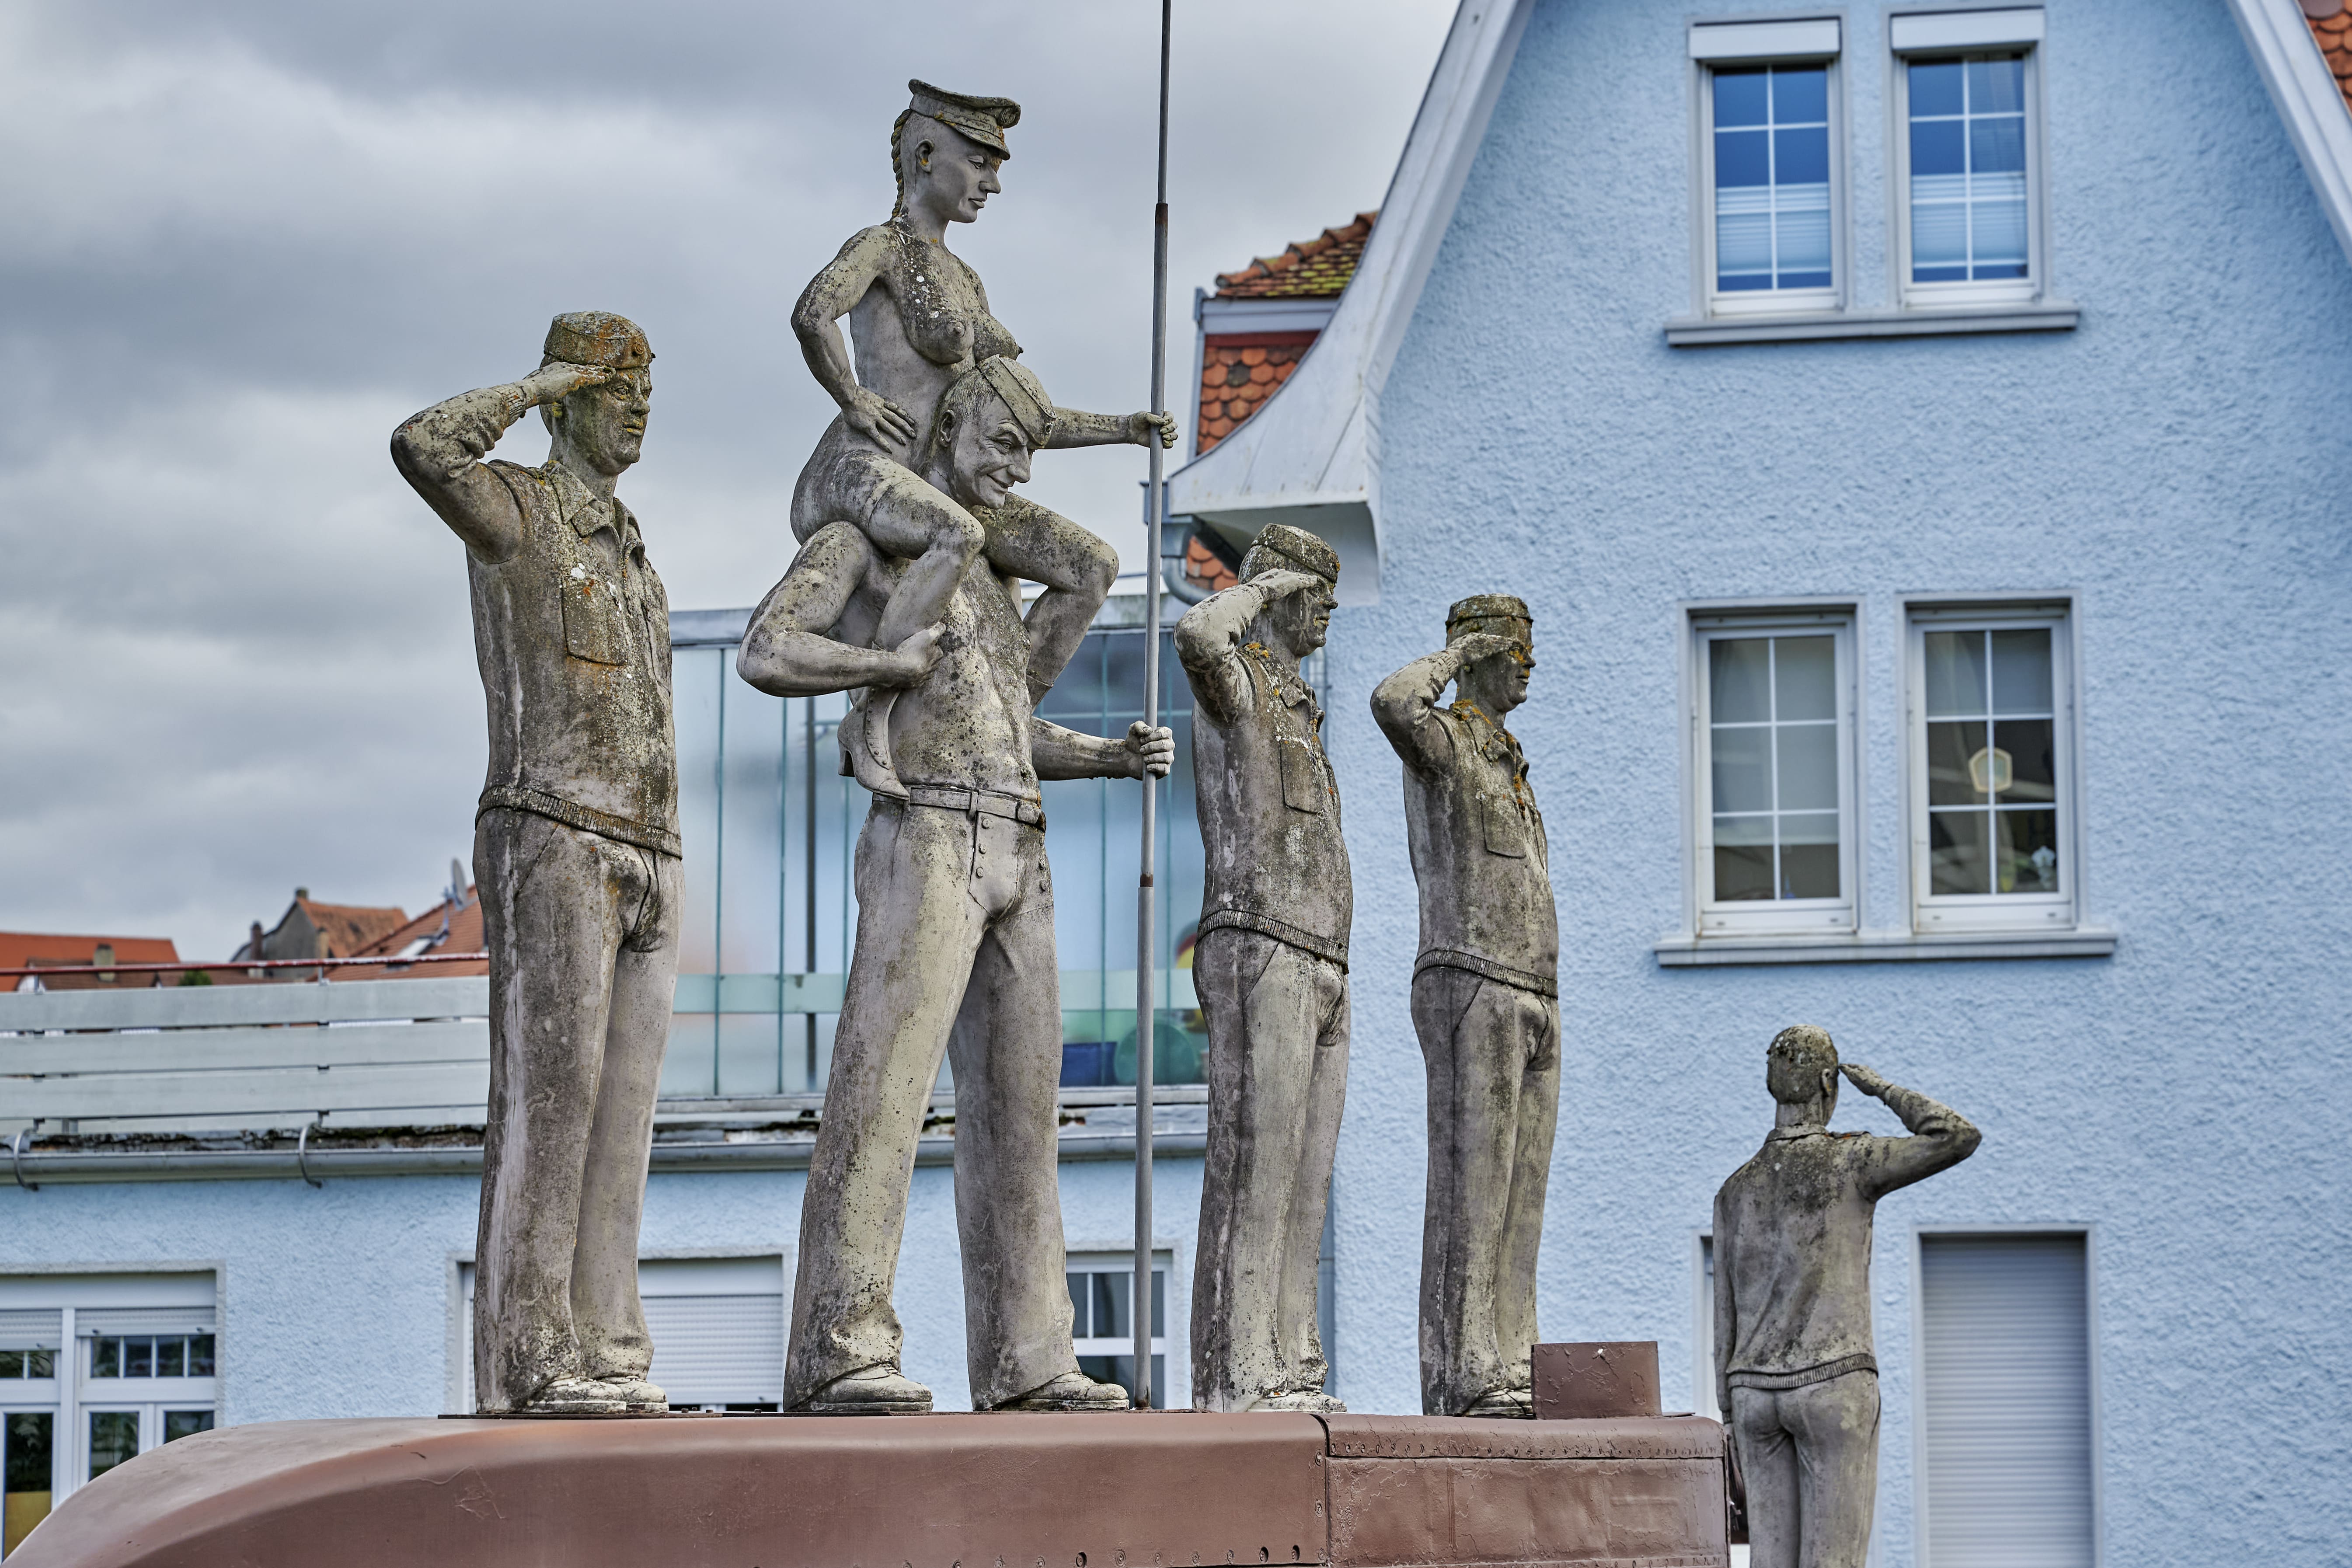  U-Boot-Denkmal von Peter Lenk; Foto: Floriantrykowski.de 